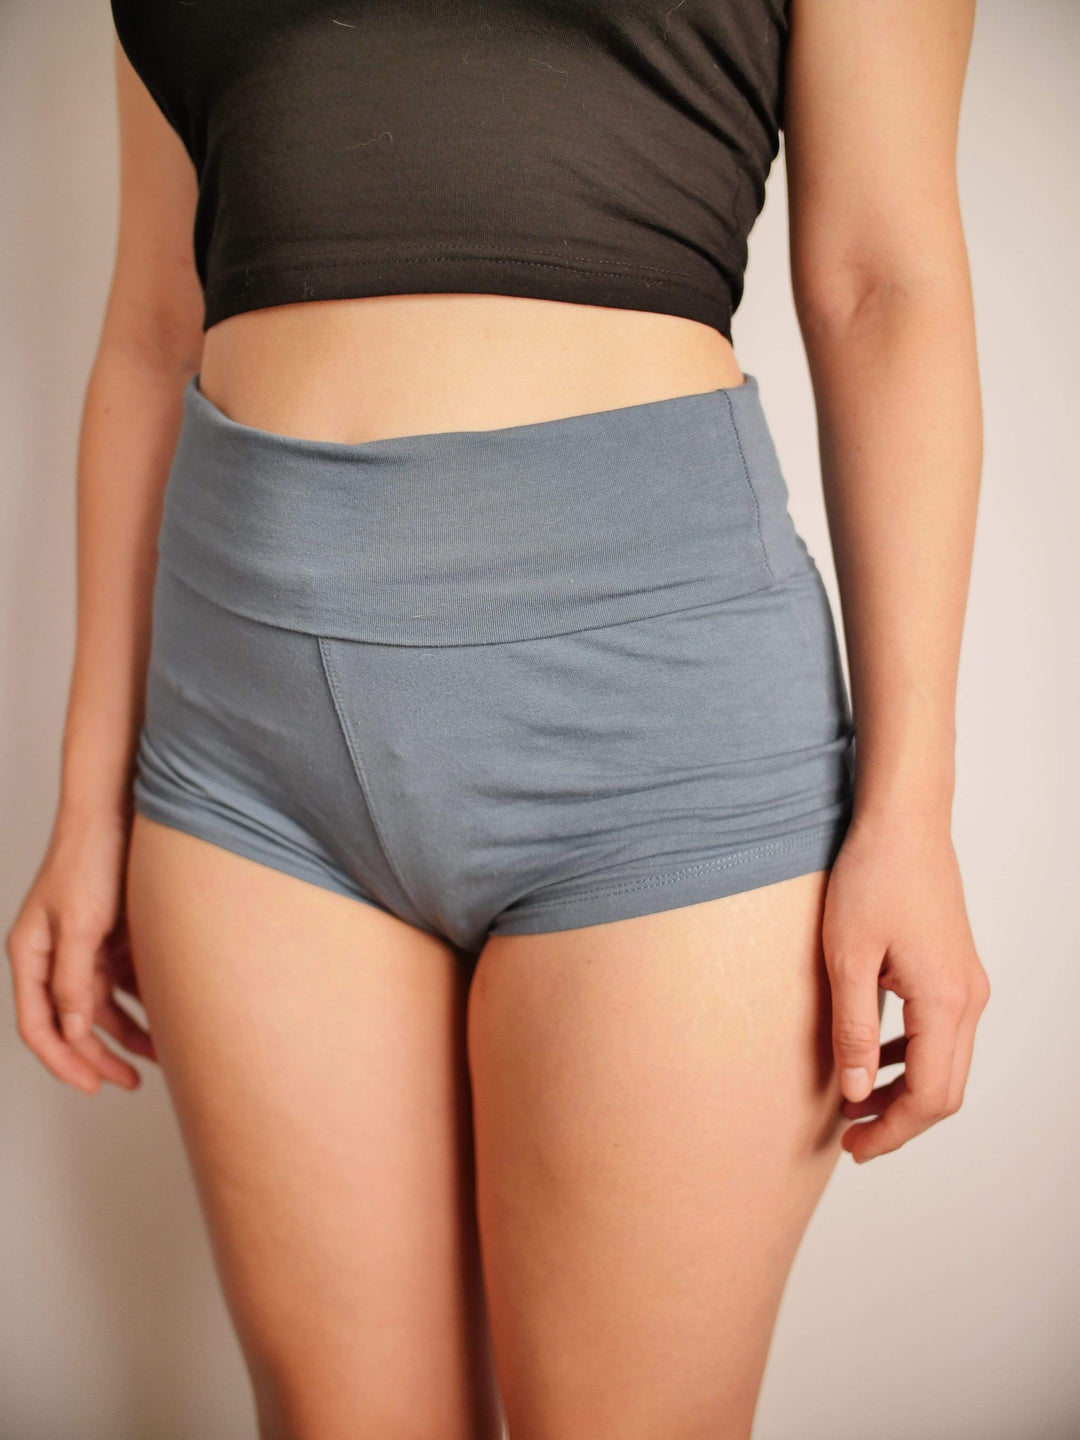 PixelThat Punderwear Yoga Shorts Keyblade Wielders Yoga Shorts/Pants